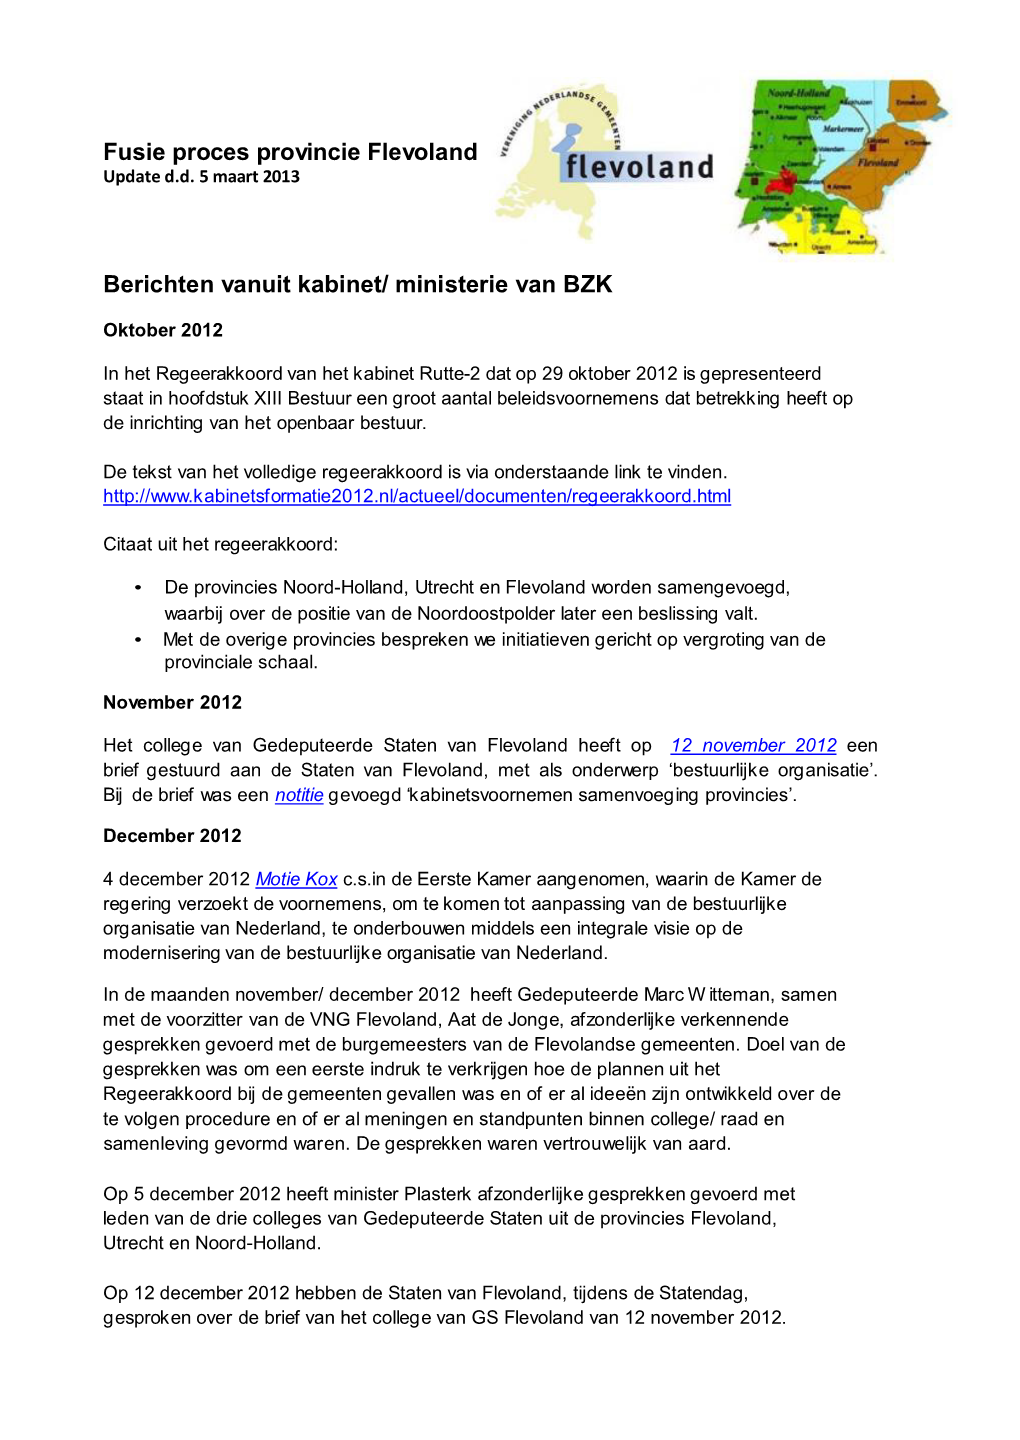 Fusie Proces Provincie Flevoland Berichten Vanuit Kabinet/ Ministerie